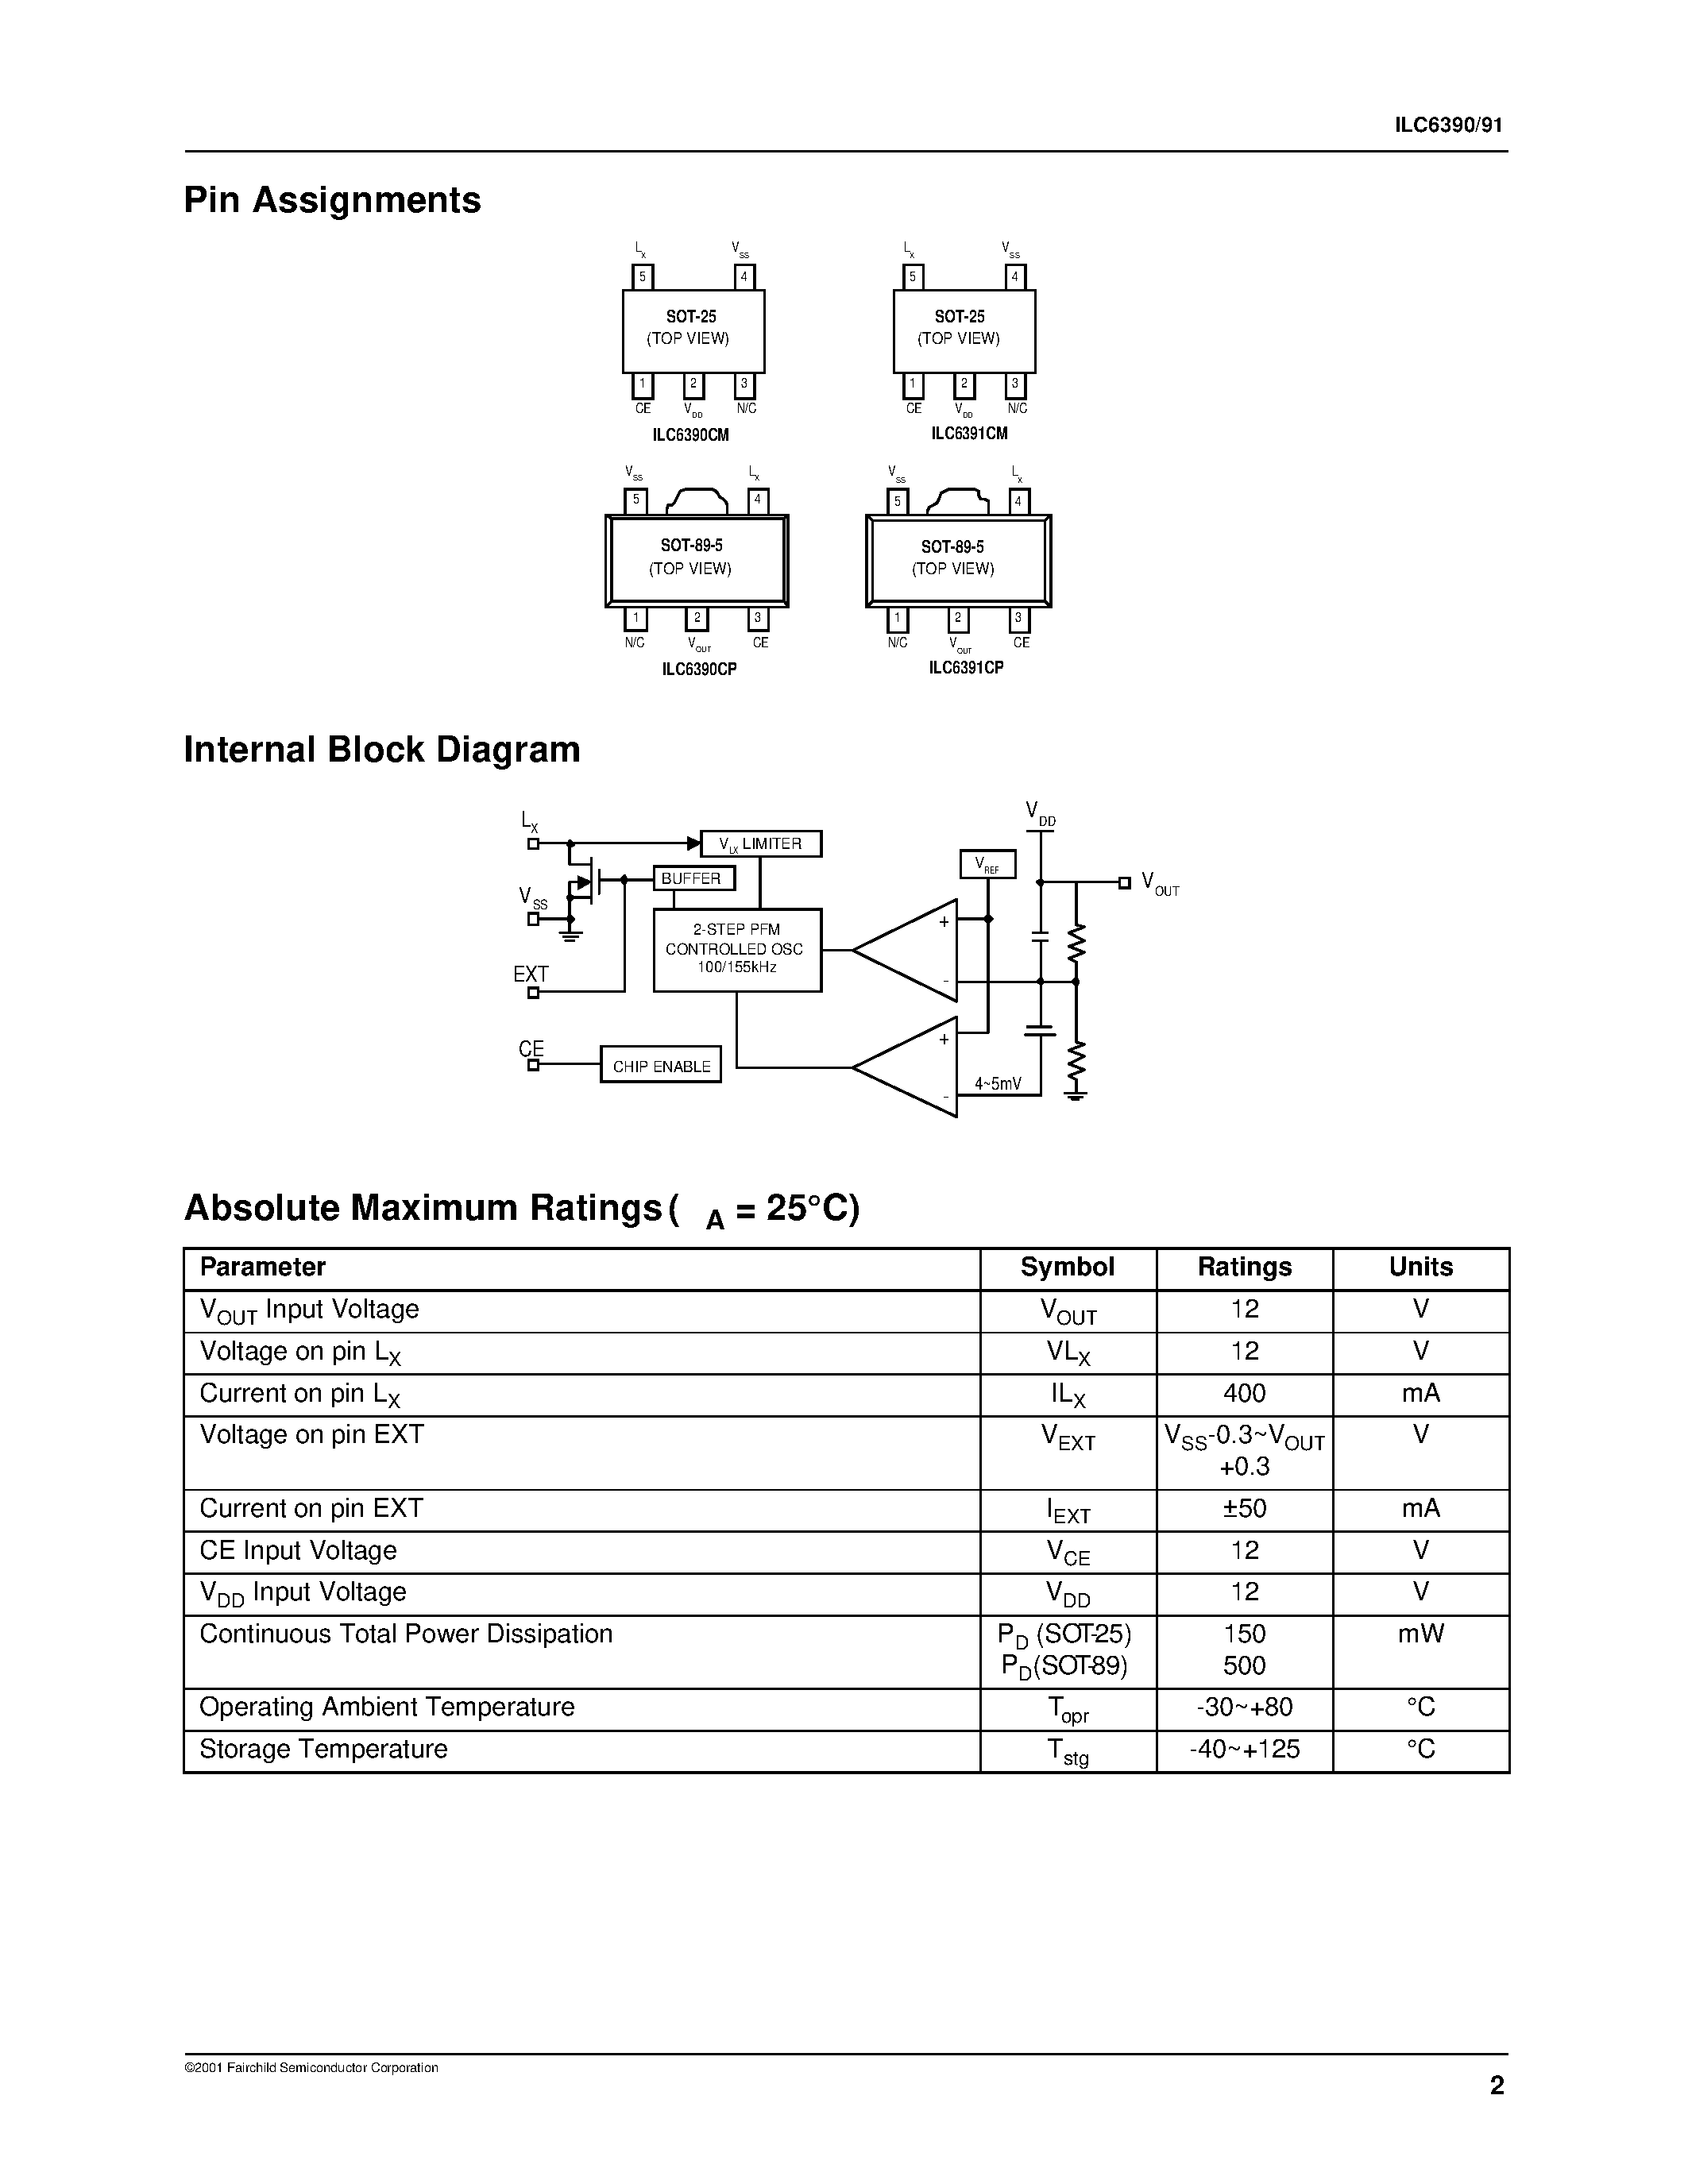 Datasheet ILC6390 - (ILC6390 / ILC6391) SOT-89 Step-Up PFM Switcher page 2